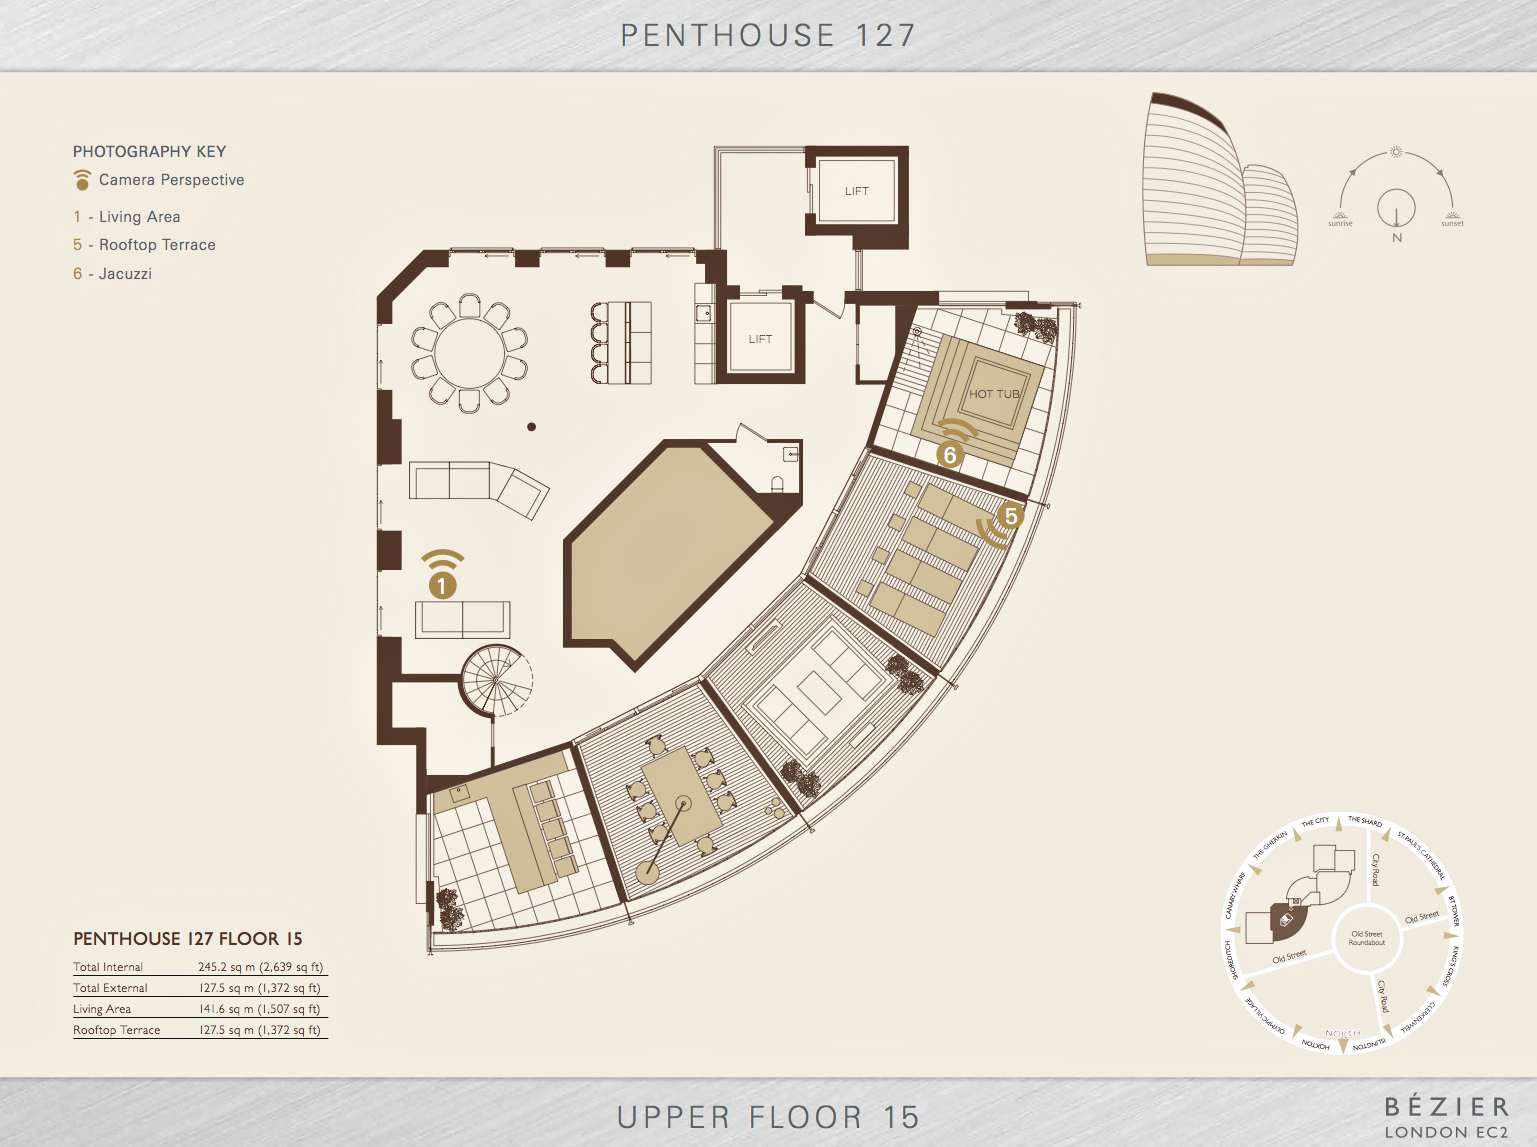 Upper Floor 15 Plan - Penthouse 127 Bezier EC2 - London, England, UK